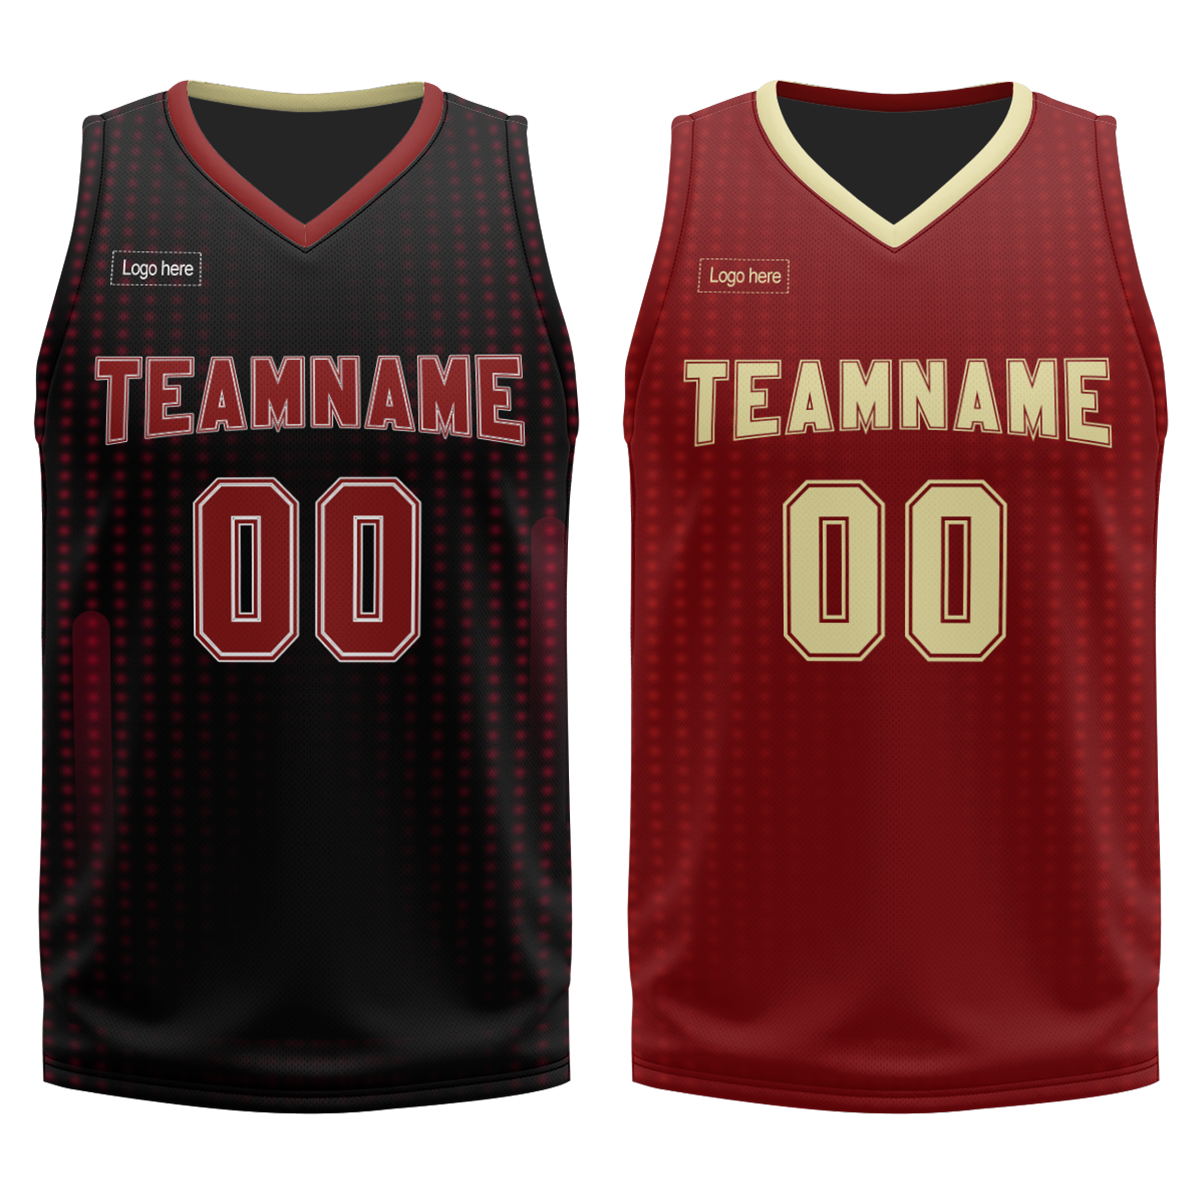 multiple-design-reversible-basketball-jersey-team-set-your-own-print-men-kids-youth-suit-custom-logo-basketball-uniform-jersey-at-cj-pod-4